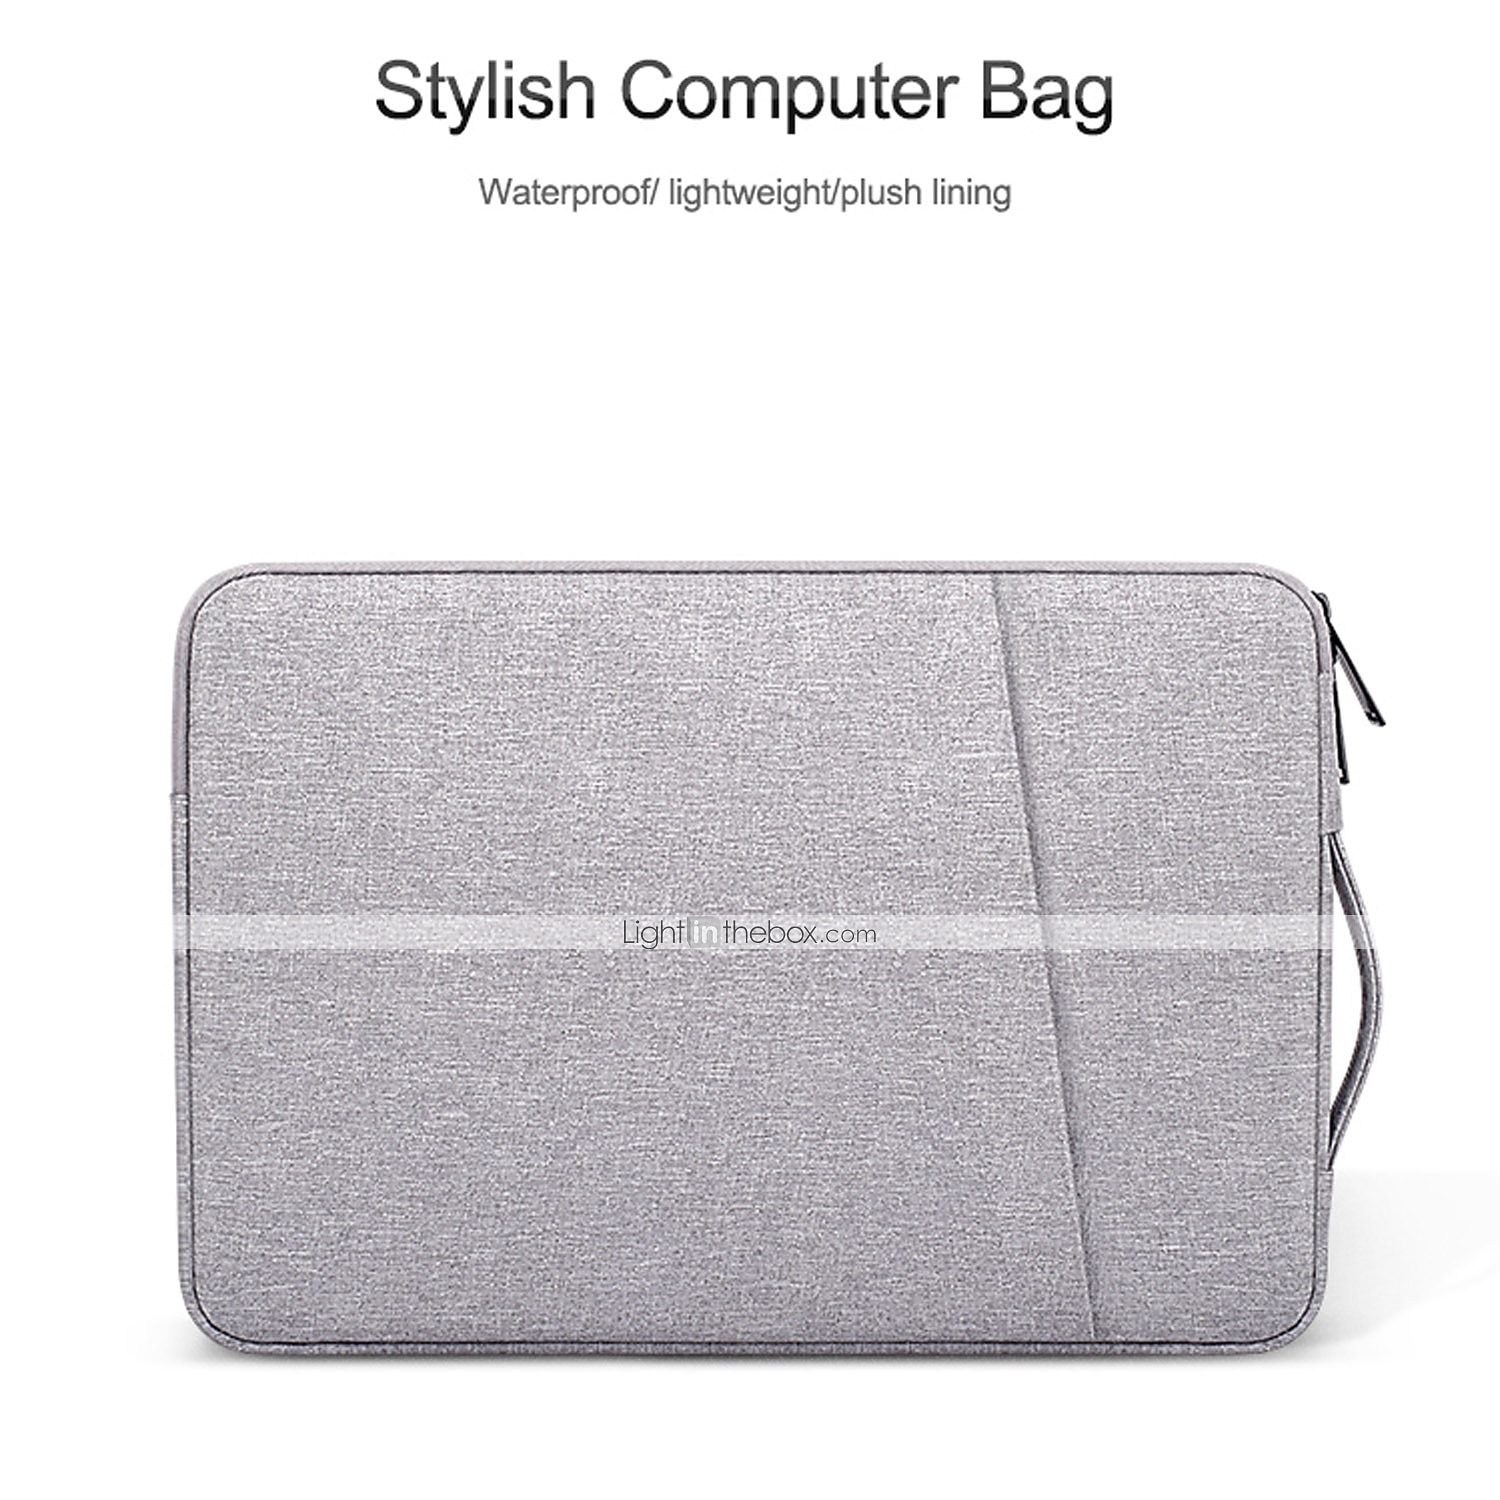 Ethnic 13-15 Inch Laptop Sleeve Bag Portable Dual Zipper Case Cover Pouch Holder Pocket Tablet Bag,Water Resistant,Black